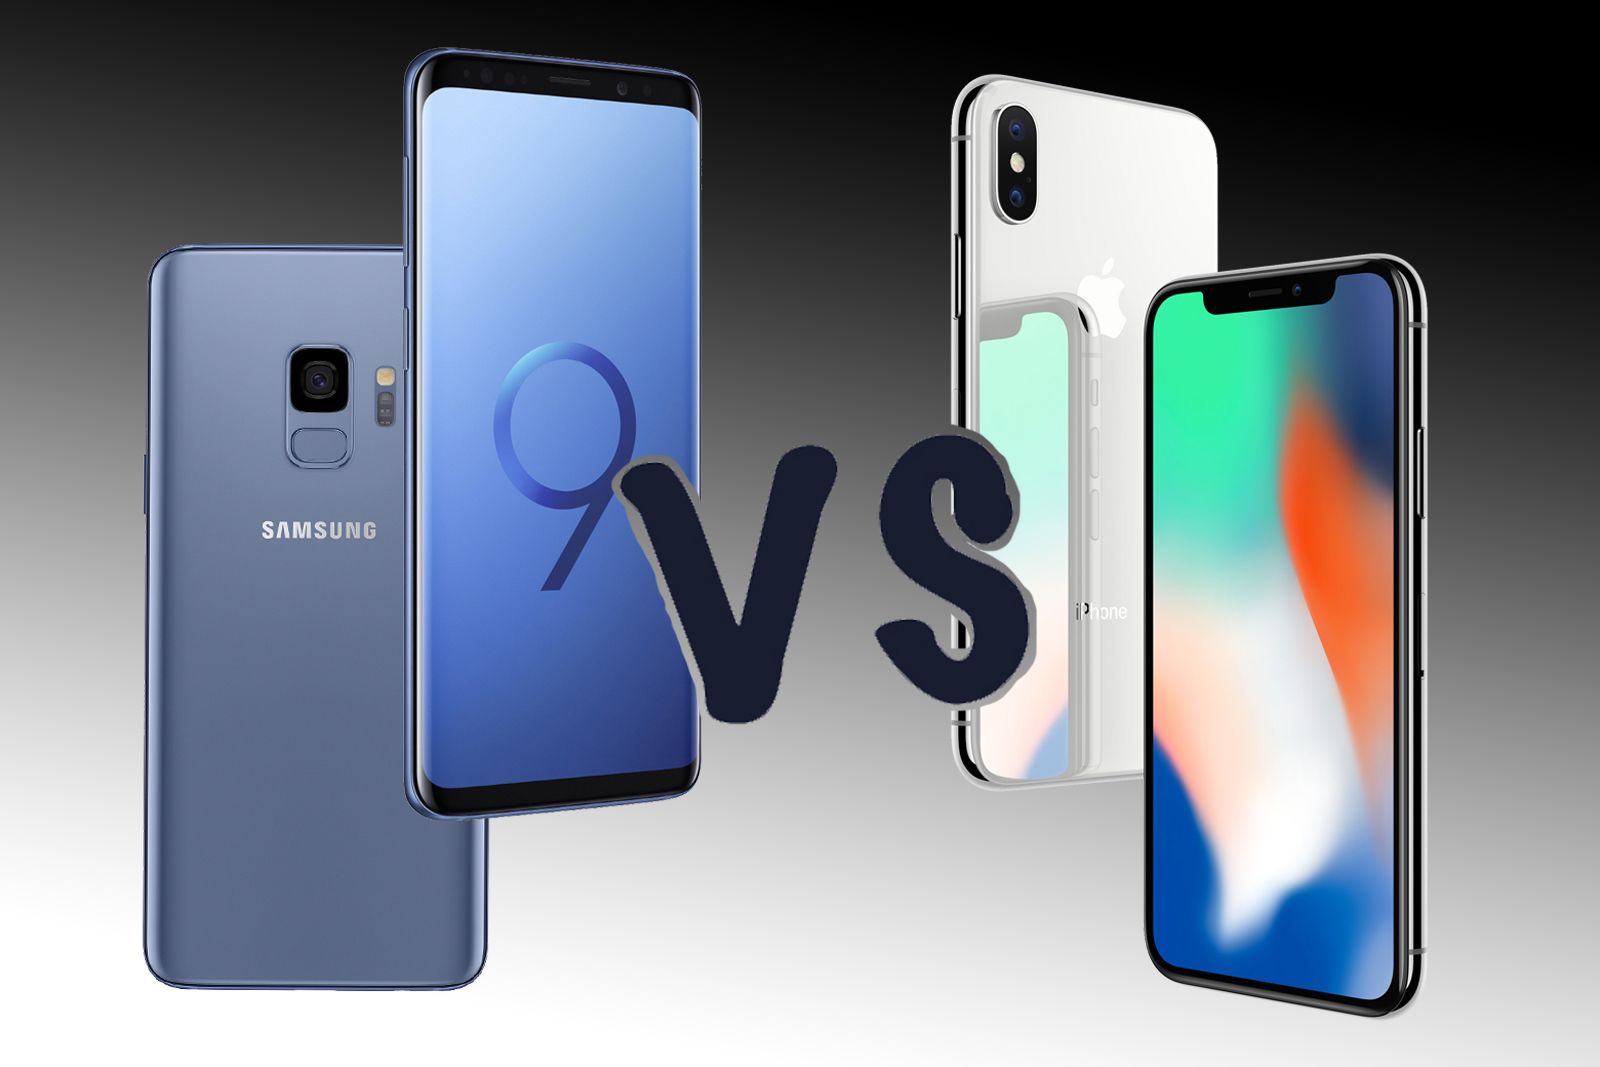 Samsung Galaxy S9 vs Apple iPhone X image 1